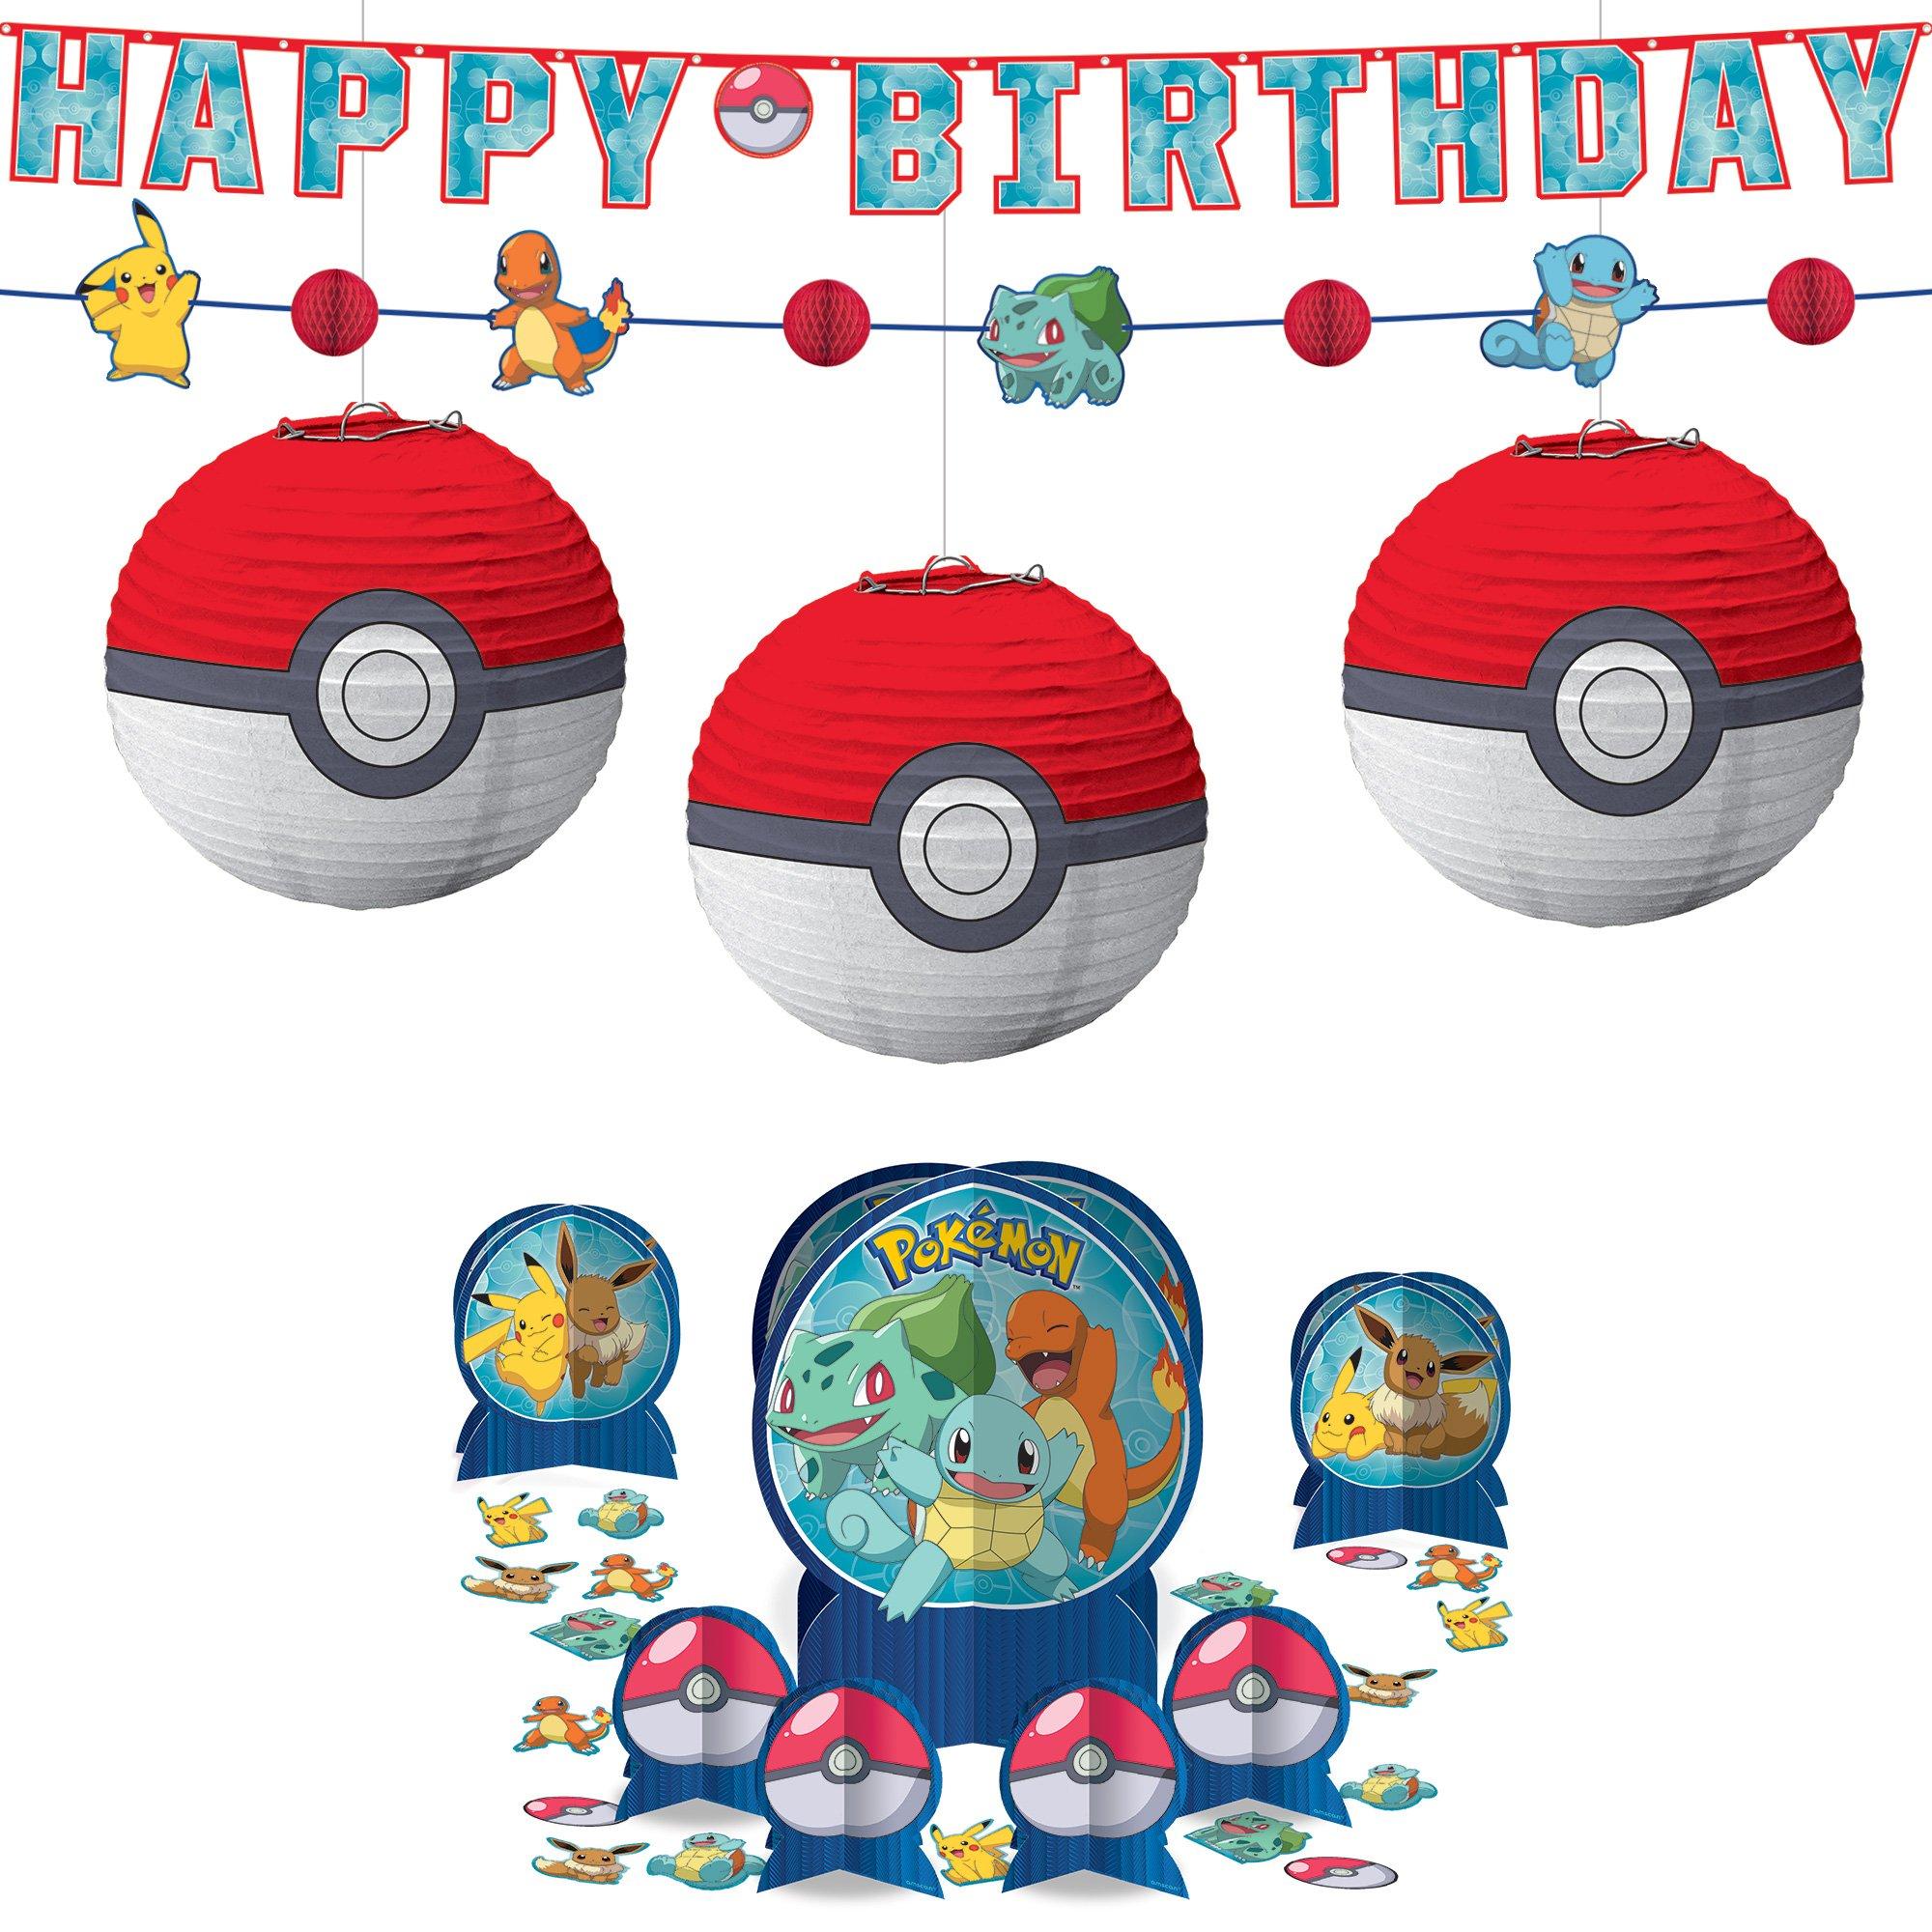 Pokémon Core Party Decorating Supplies Pack - Kit Includes Banners, Swirl Decorations & Centerpiece